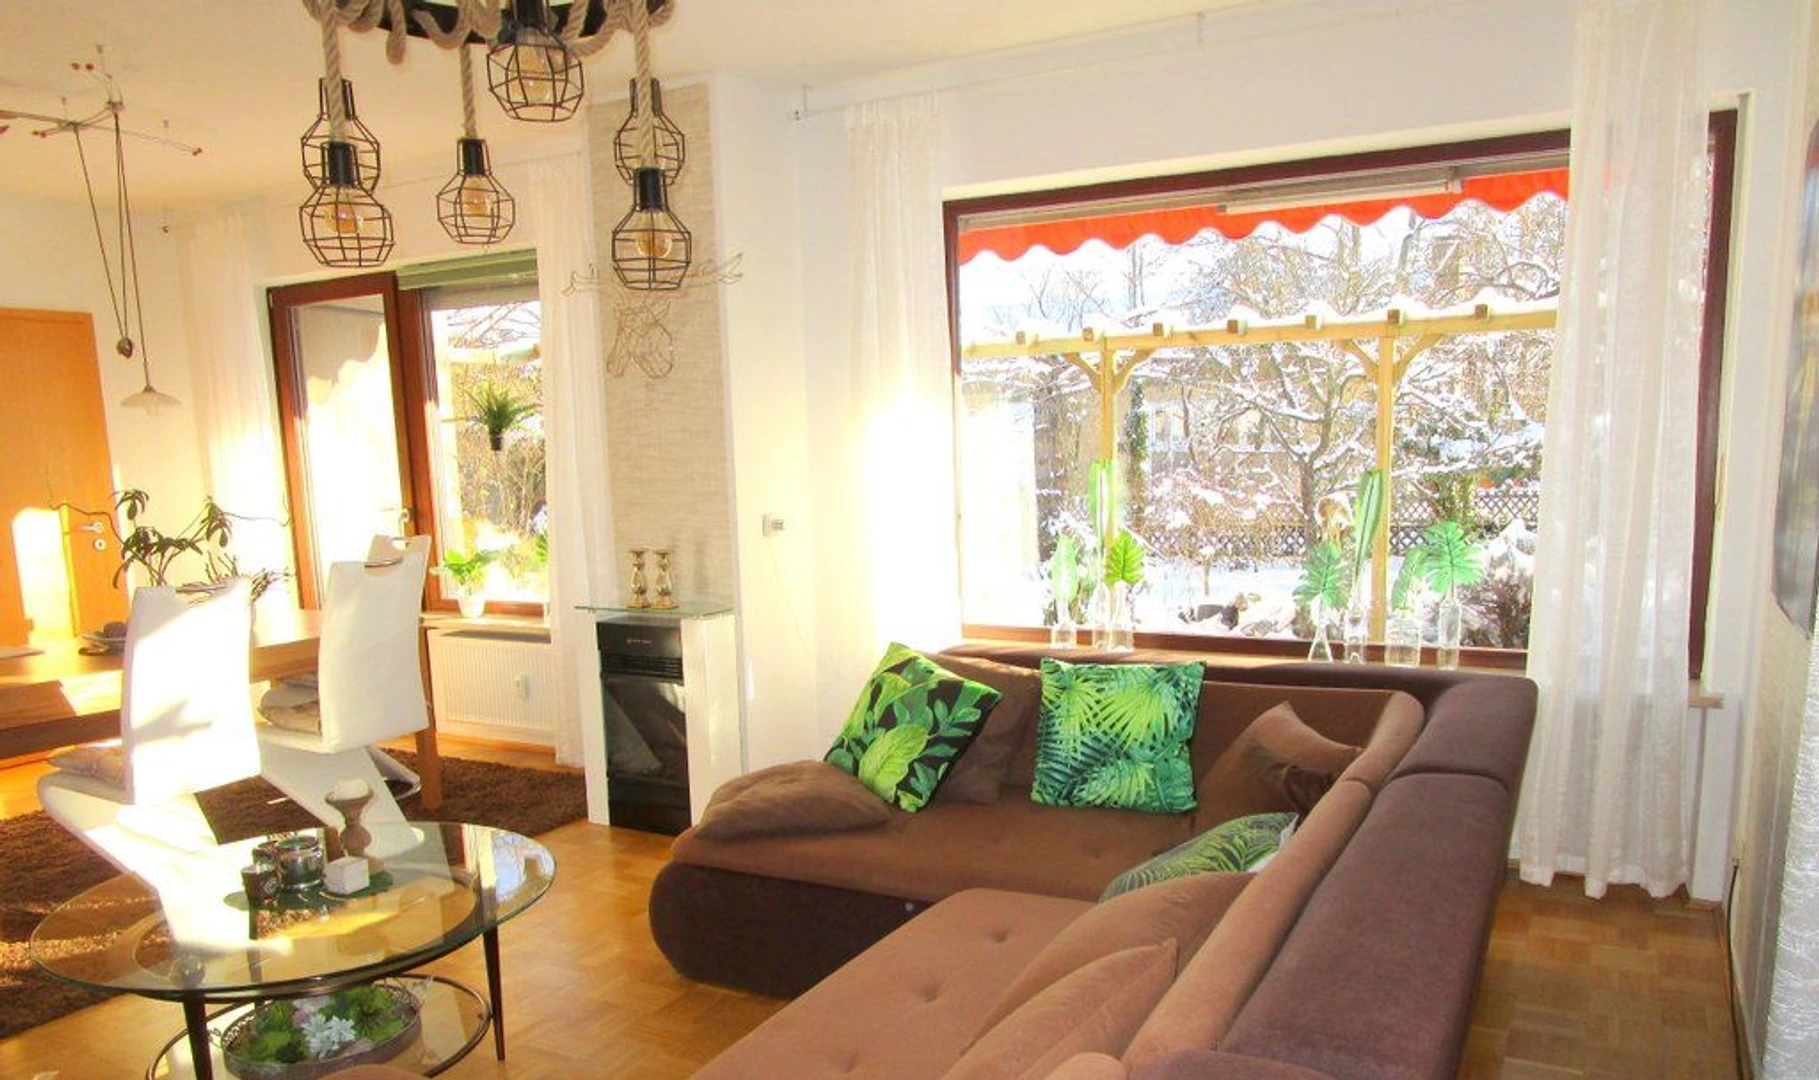 Alquiler de habitación en piso compartido en Erlangen